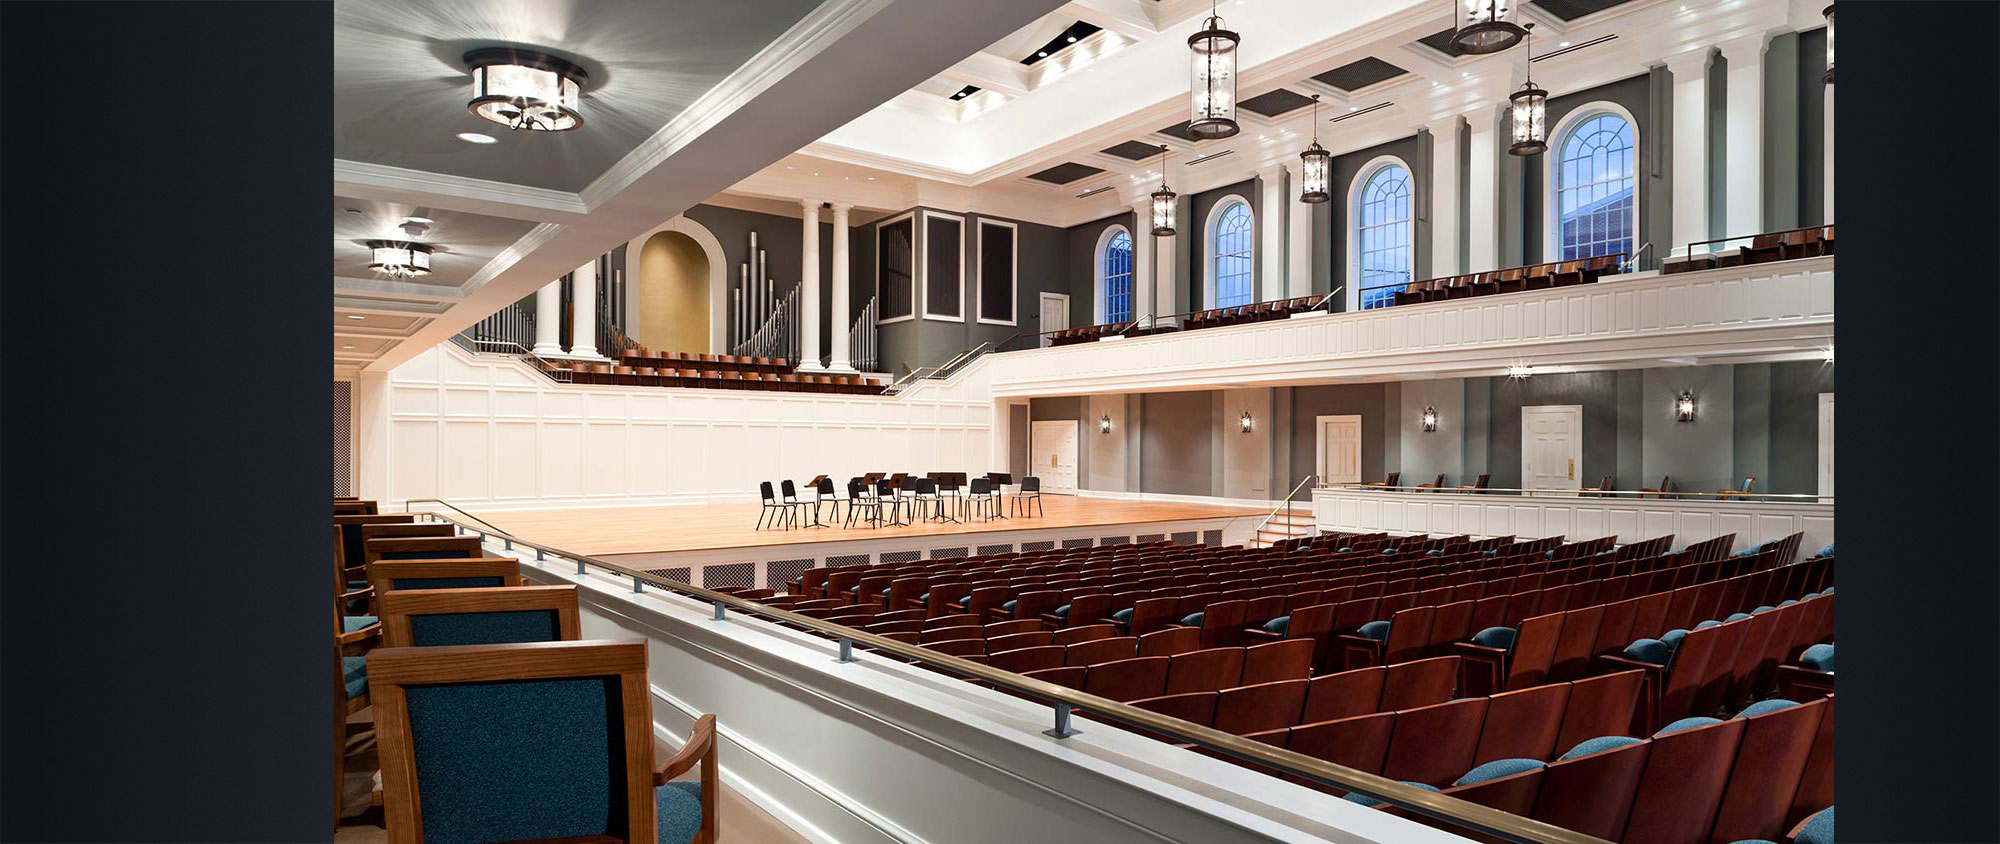 Belmont University McAfee Concert Hall